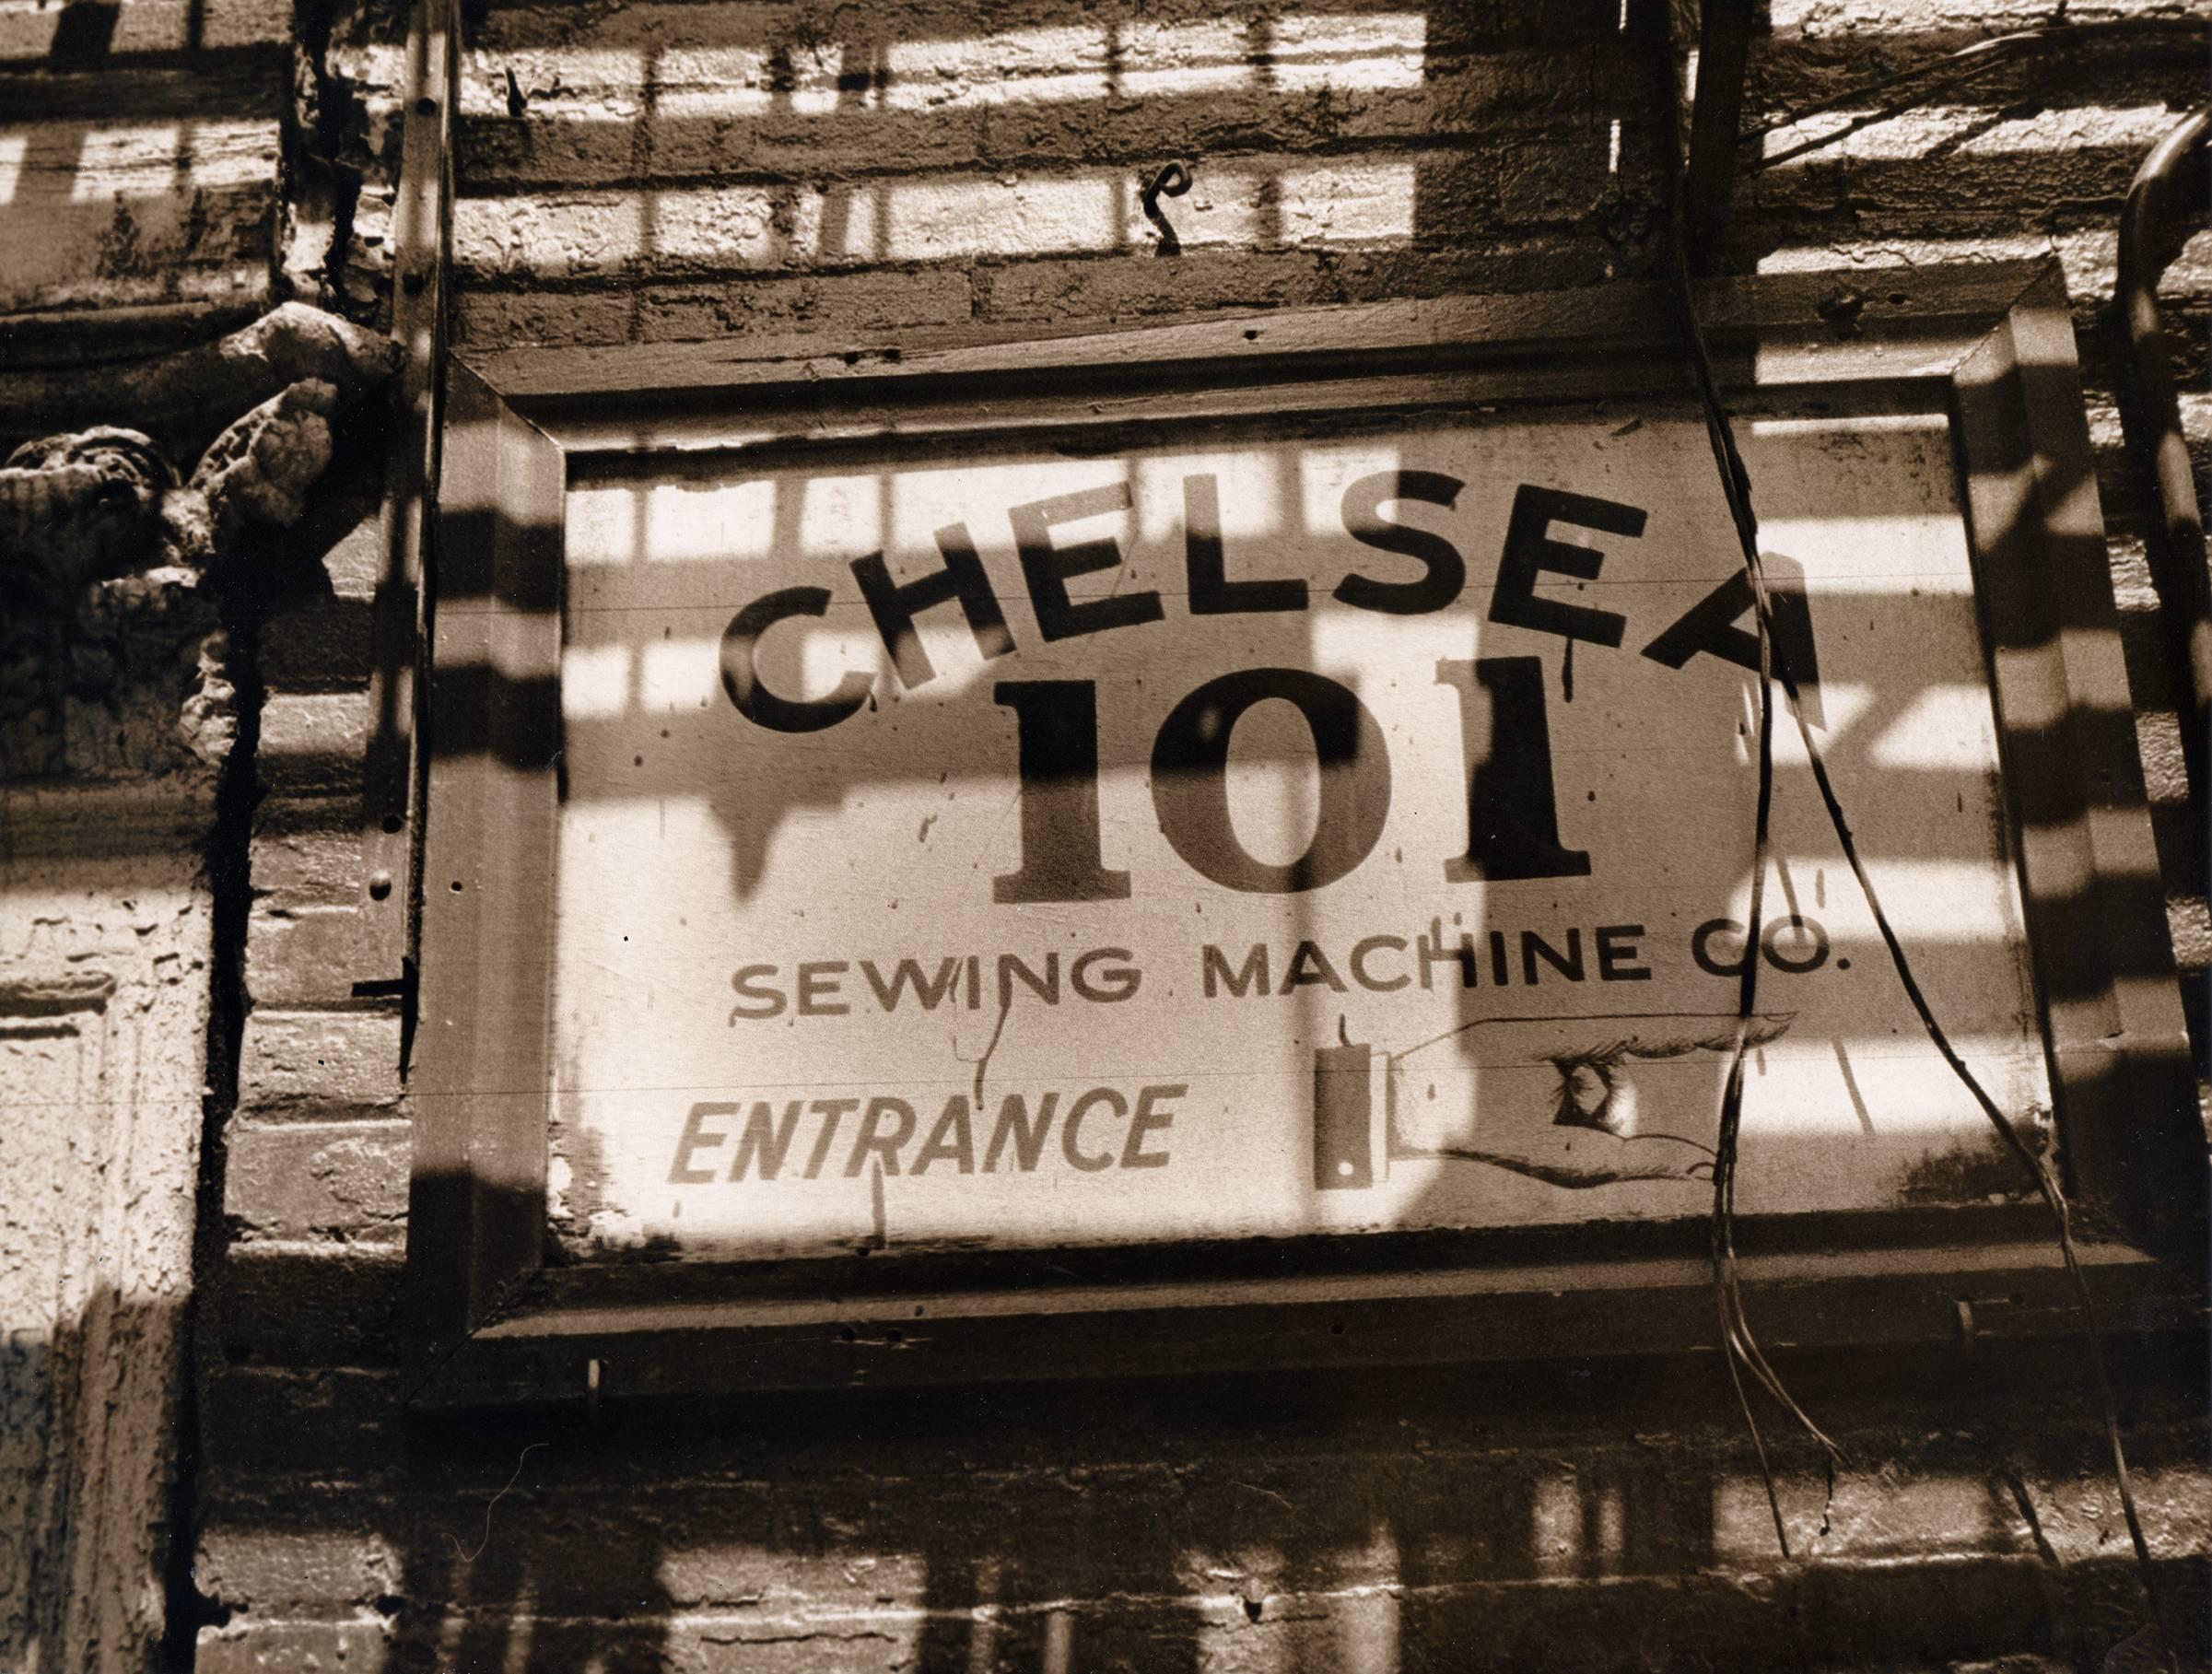 Fernando Natalici Black and White Photograph - Chelsea 101 (vintage Chelsea Manhattan photograph)